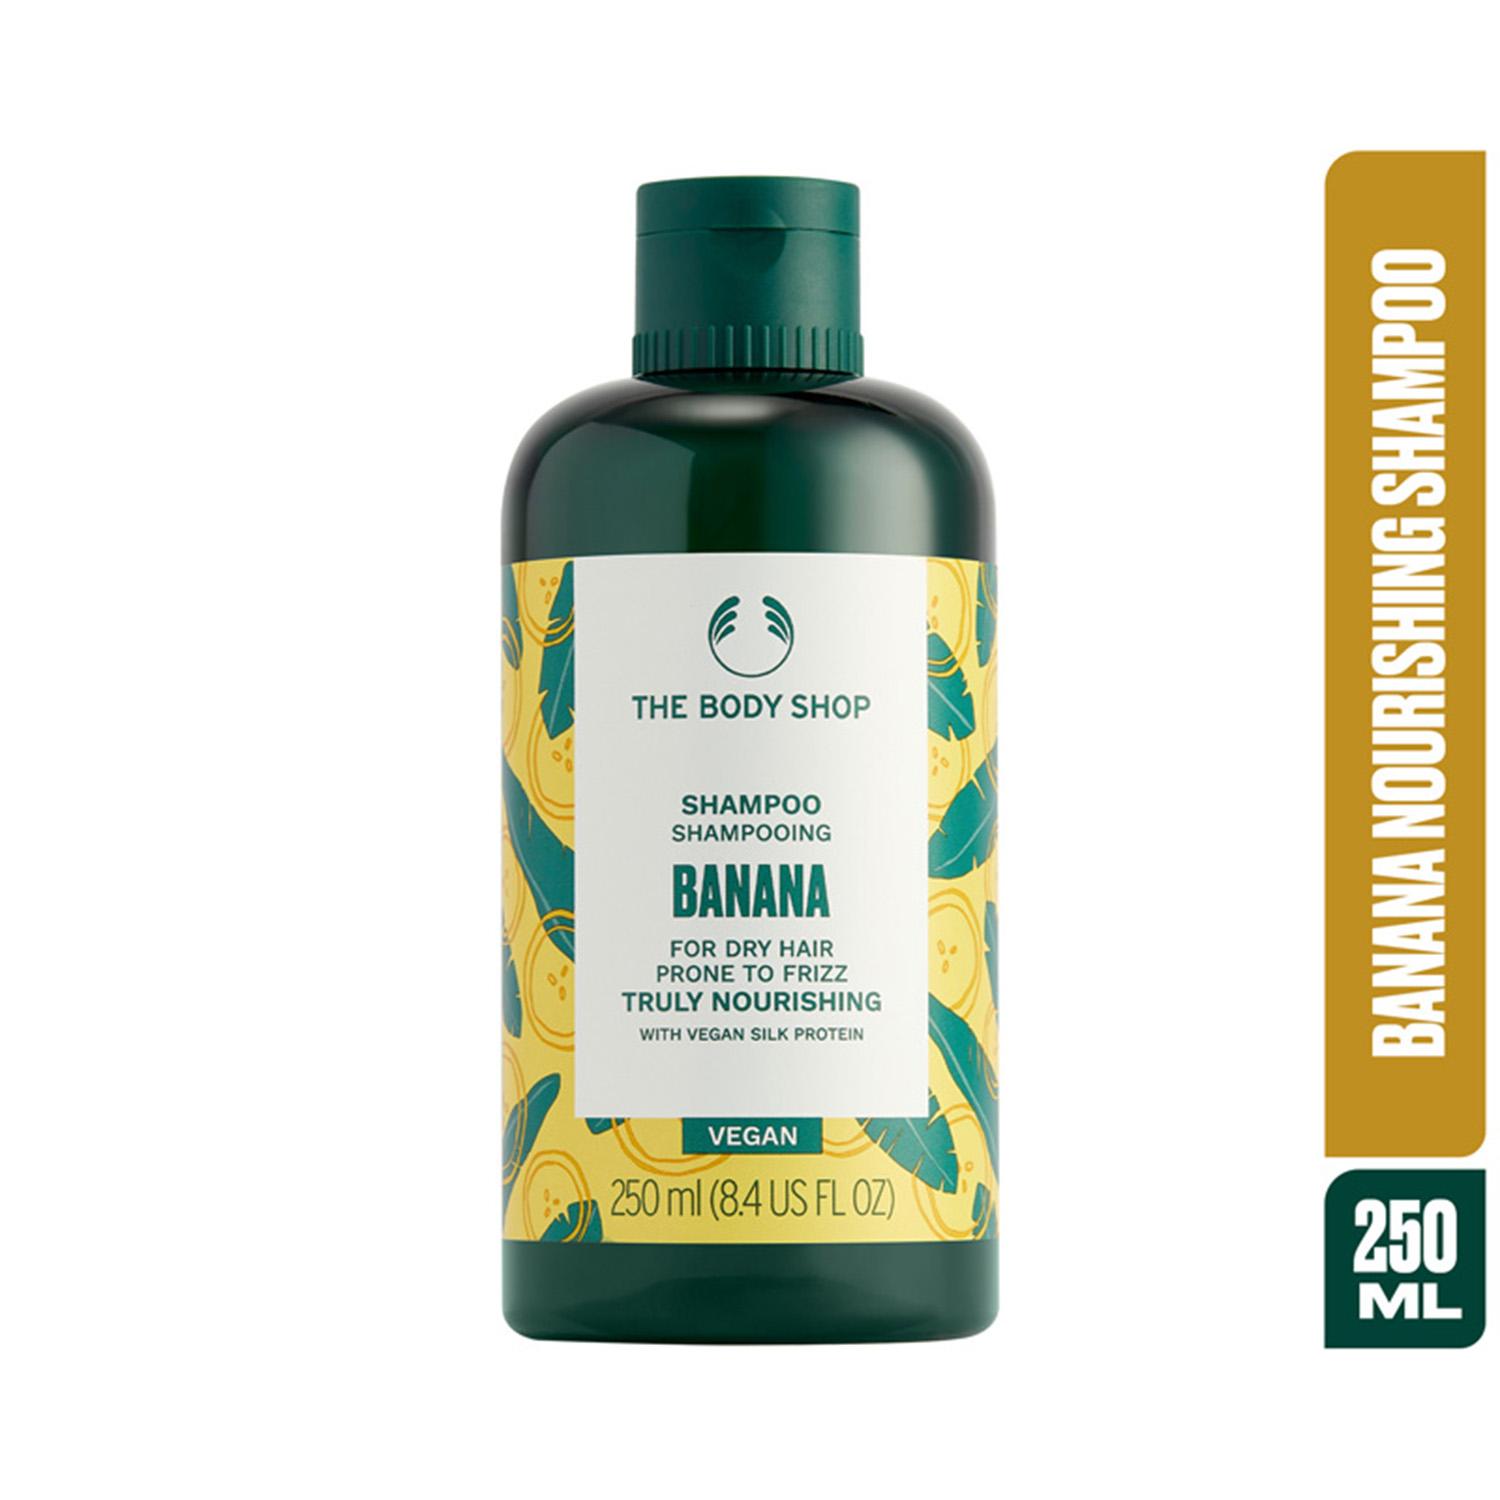 The Body Shop Banana Shampoo (250ml)